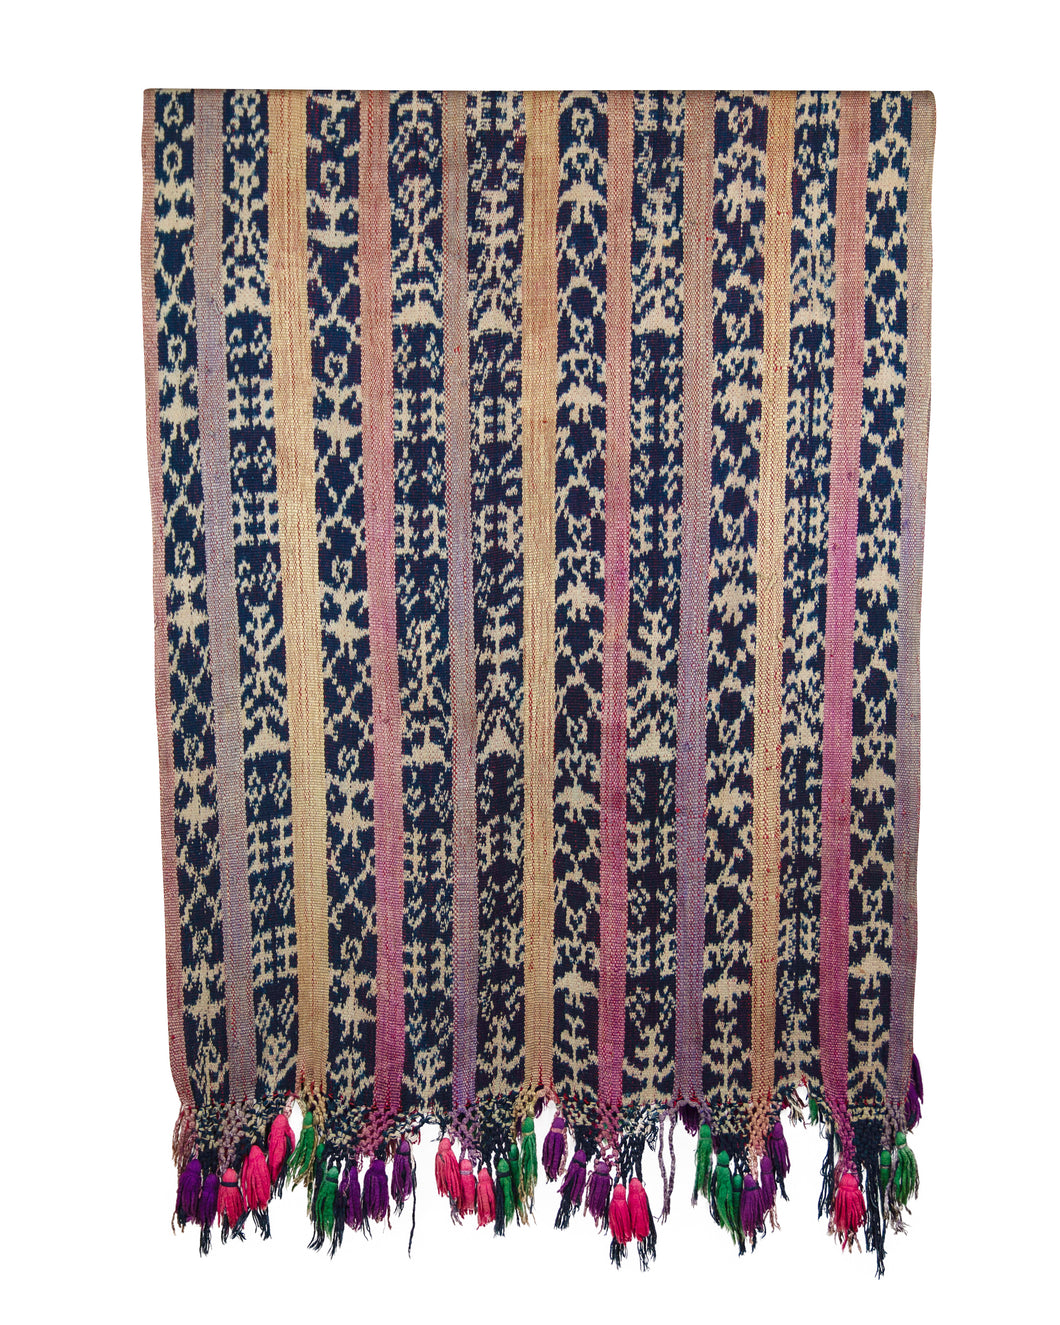 large-vintage-ethnic-wrap-or-shawl.jpg